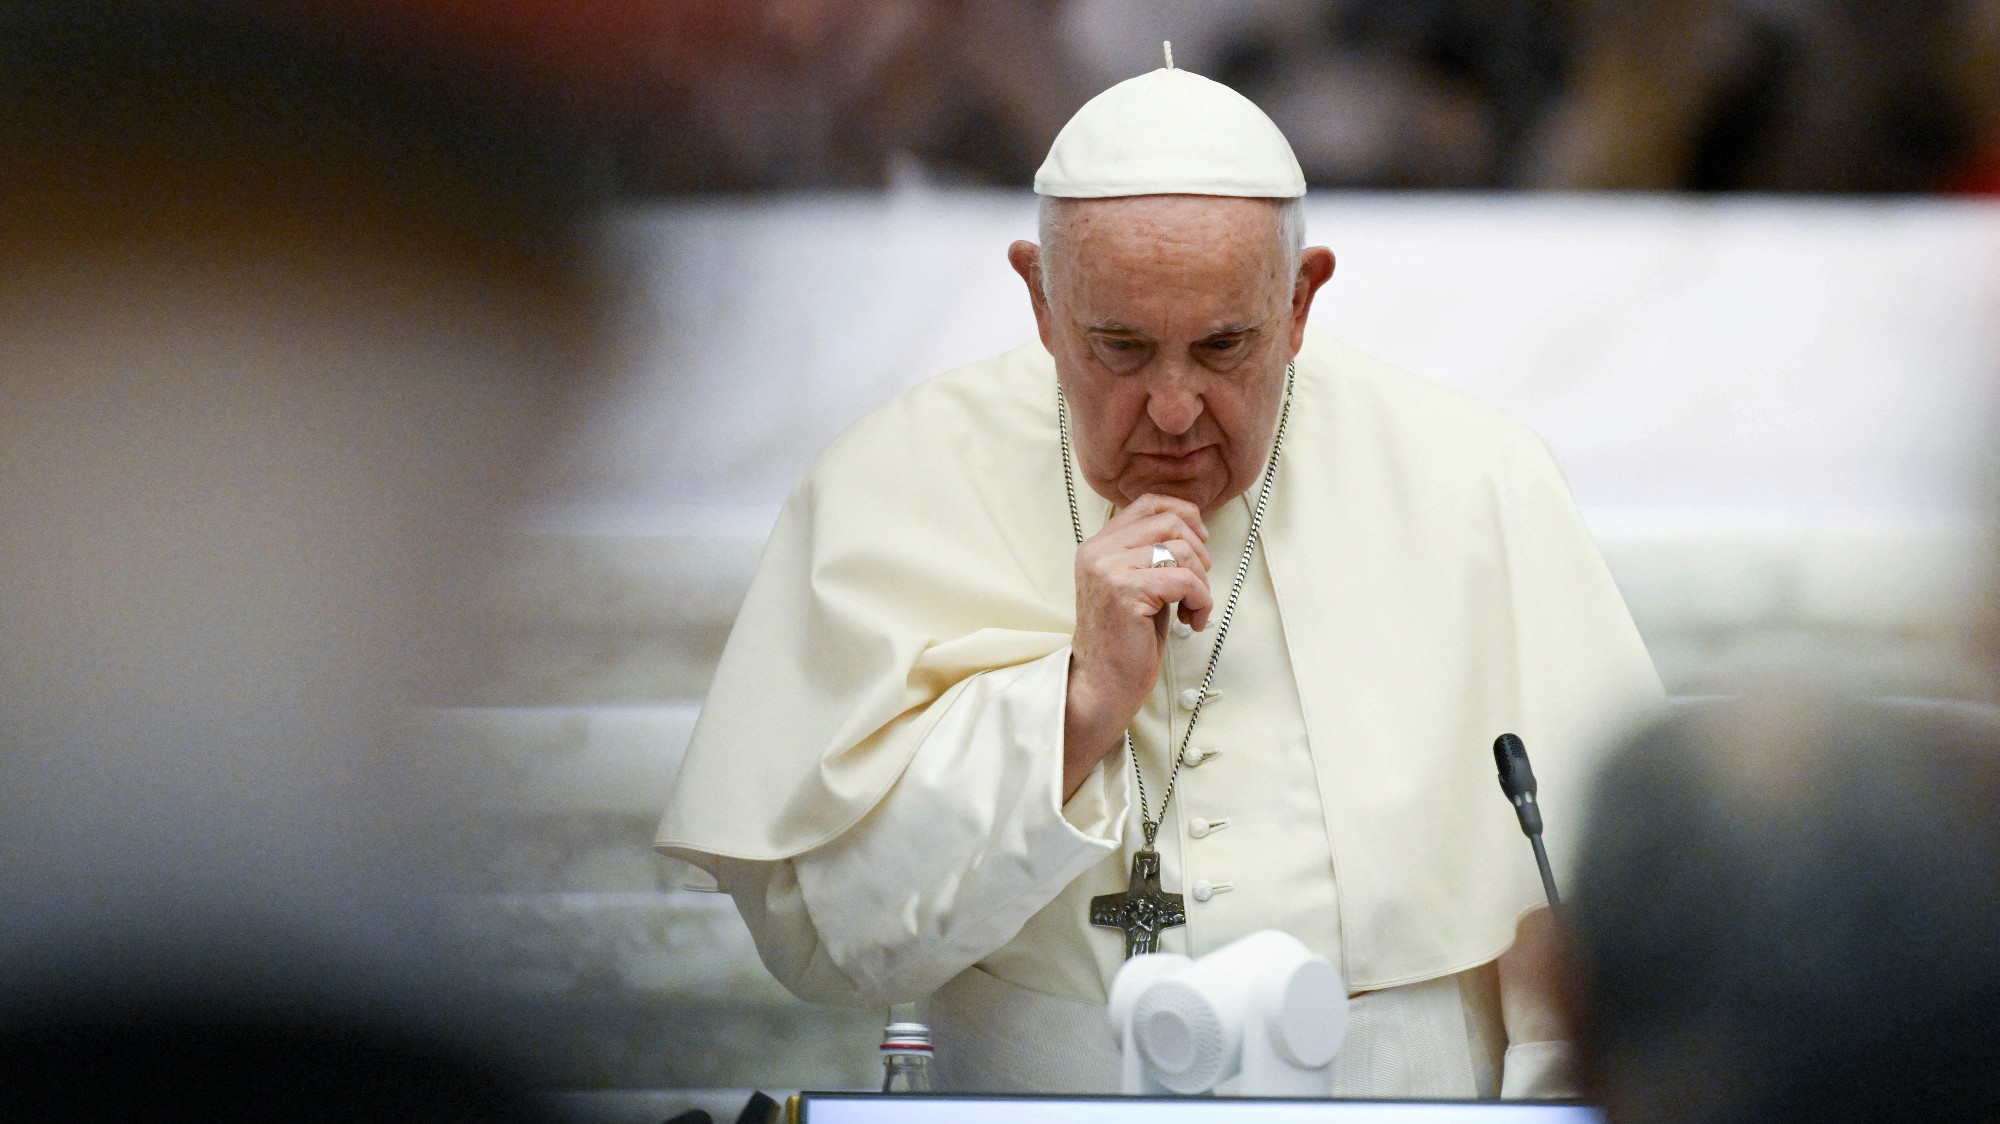 the pope looks sad